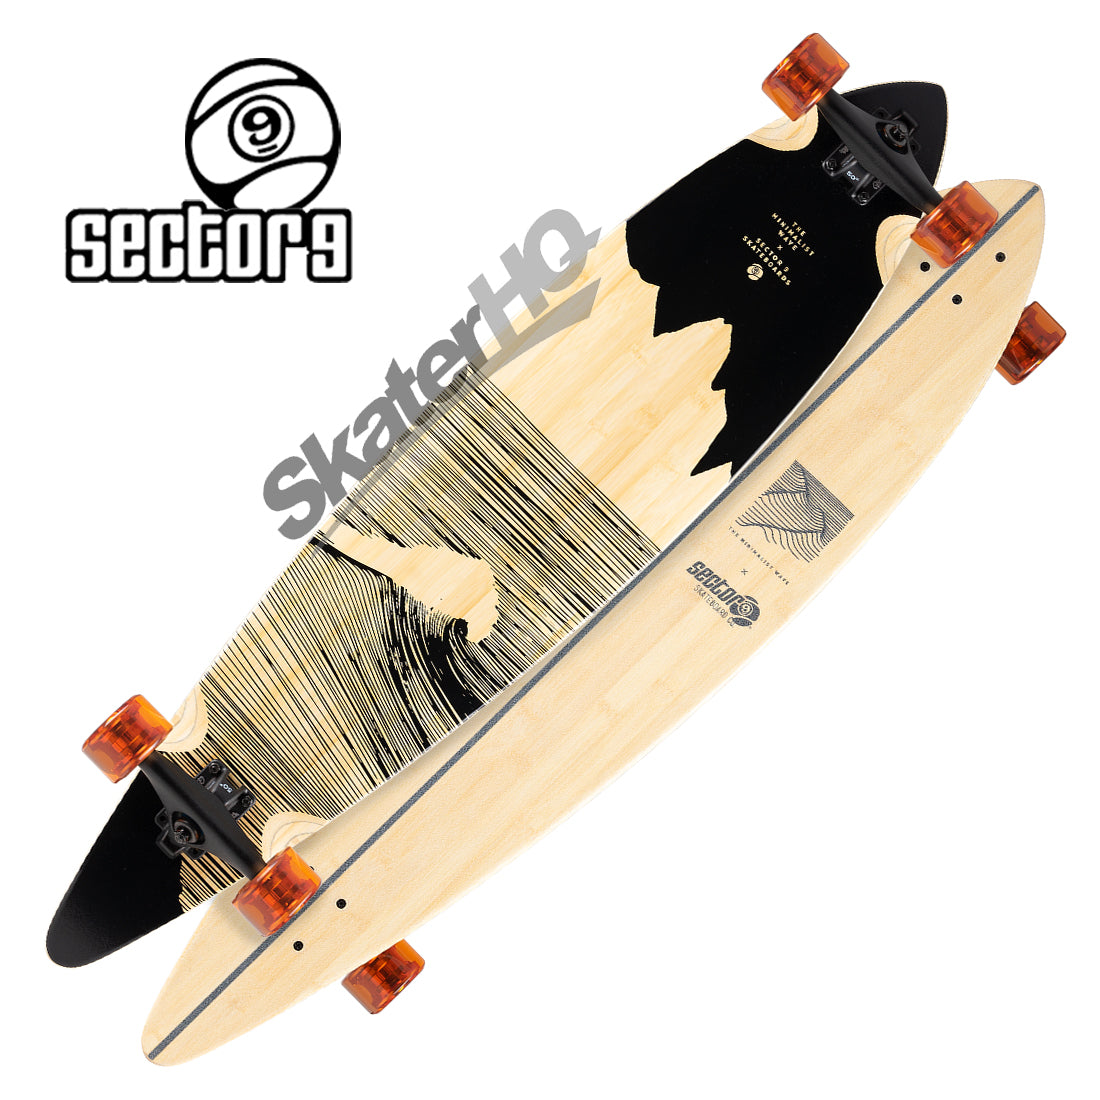 Sector 9 Maverick Crag 44 Complete - Bamboo Skateboard Completes Longboards